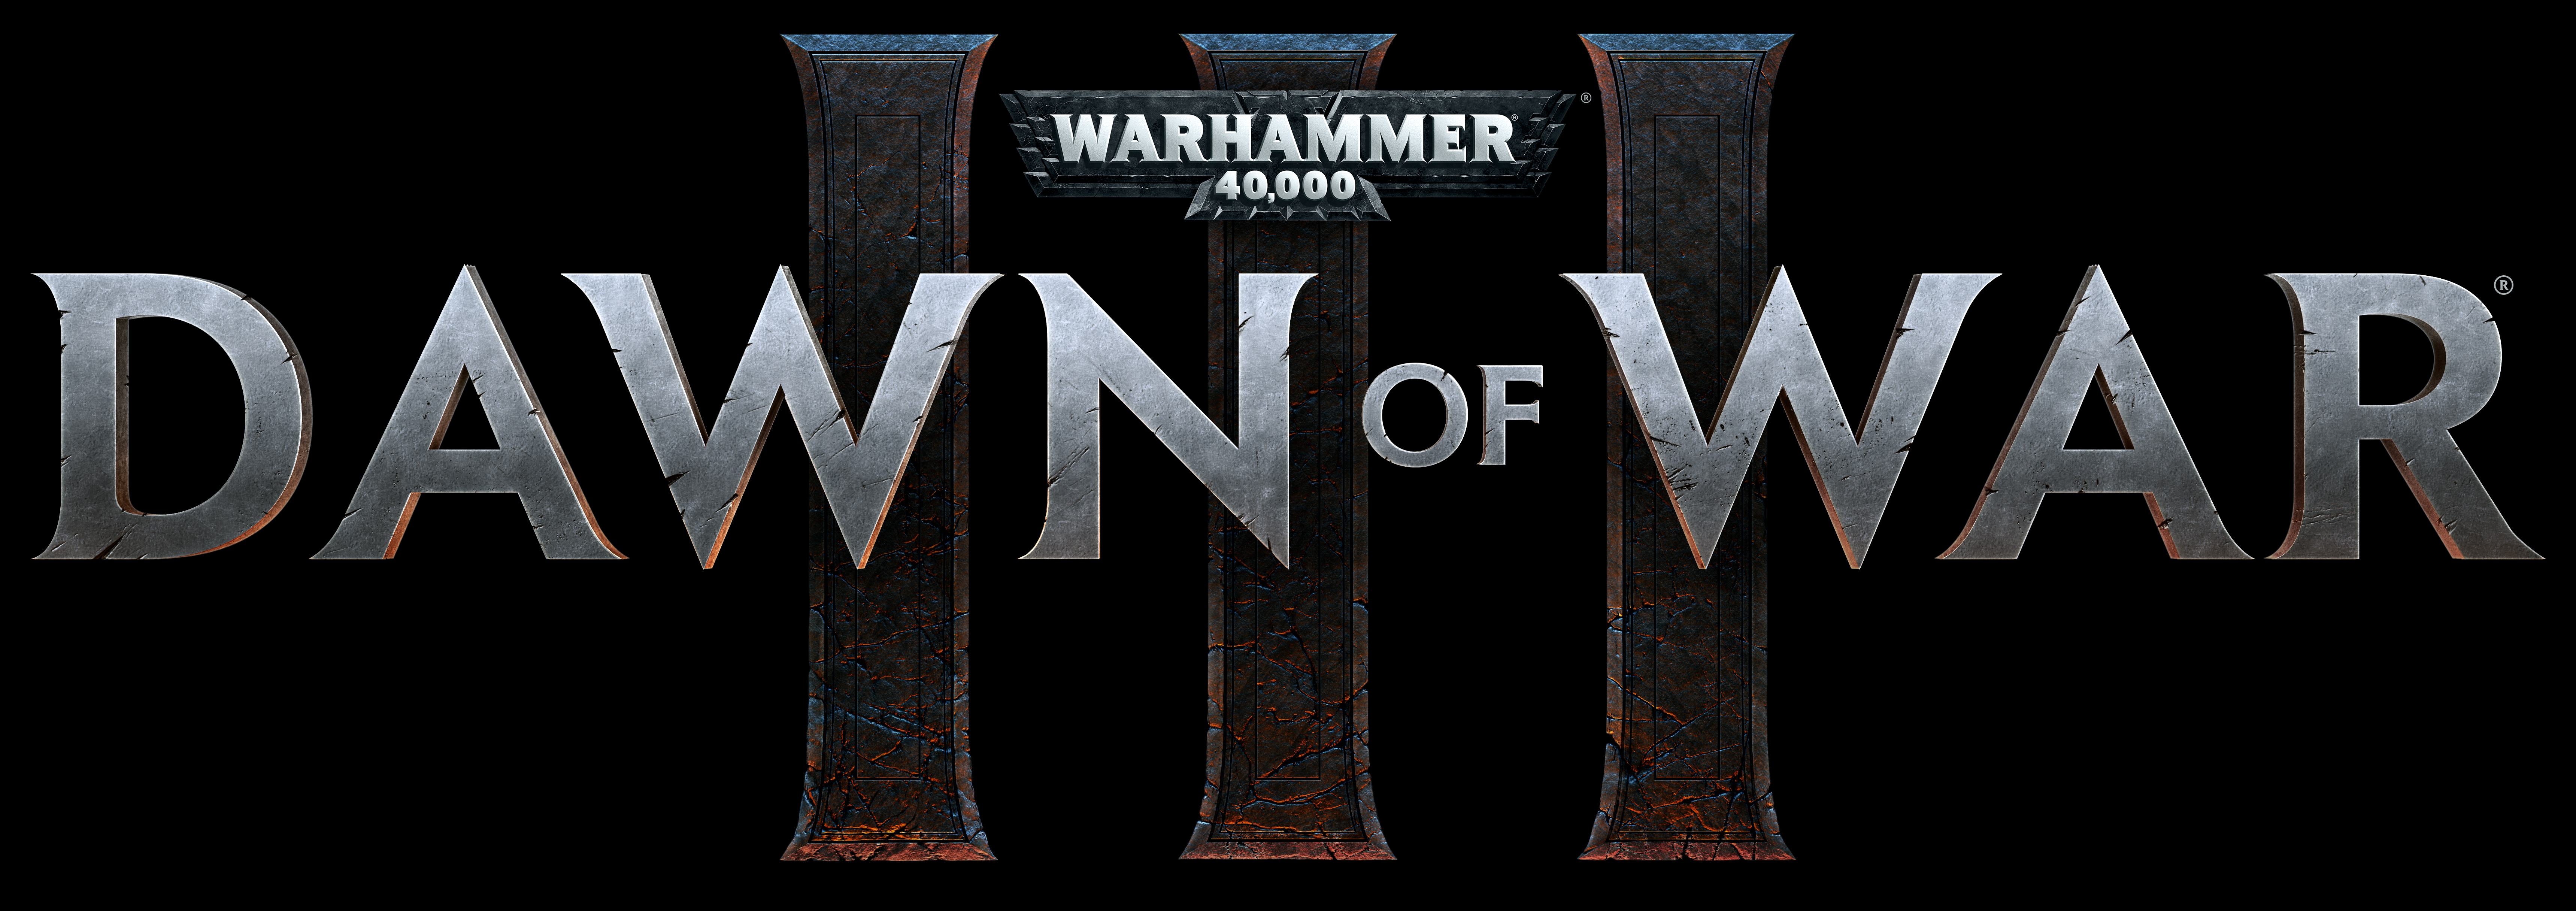 Warhammer 40,000: Dawn of War 3 Announced